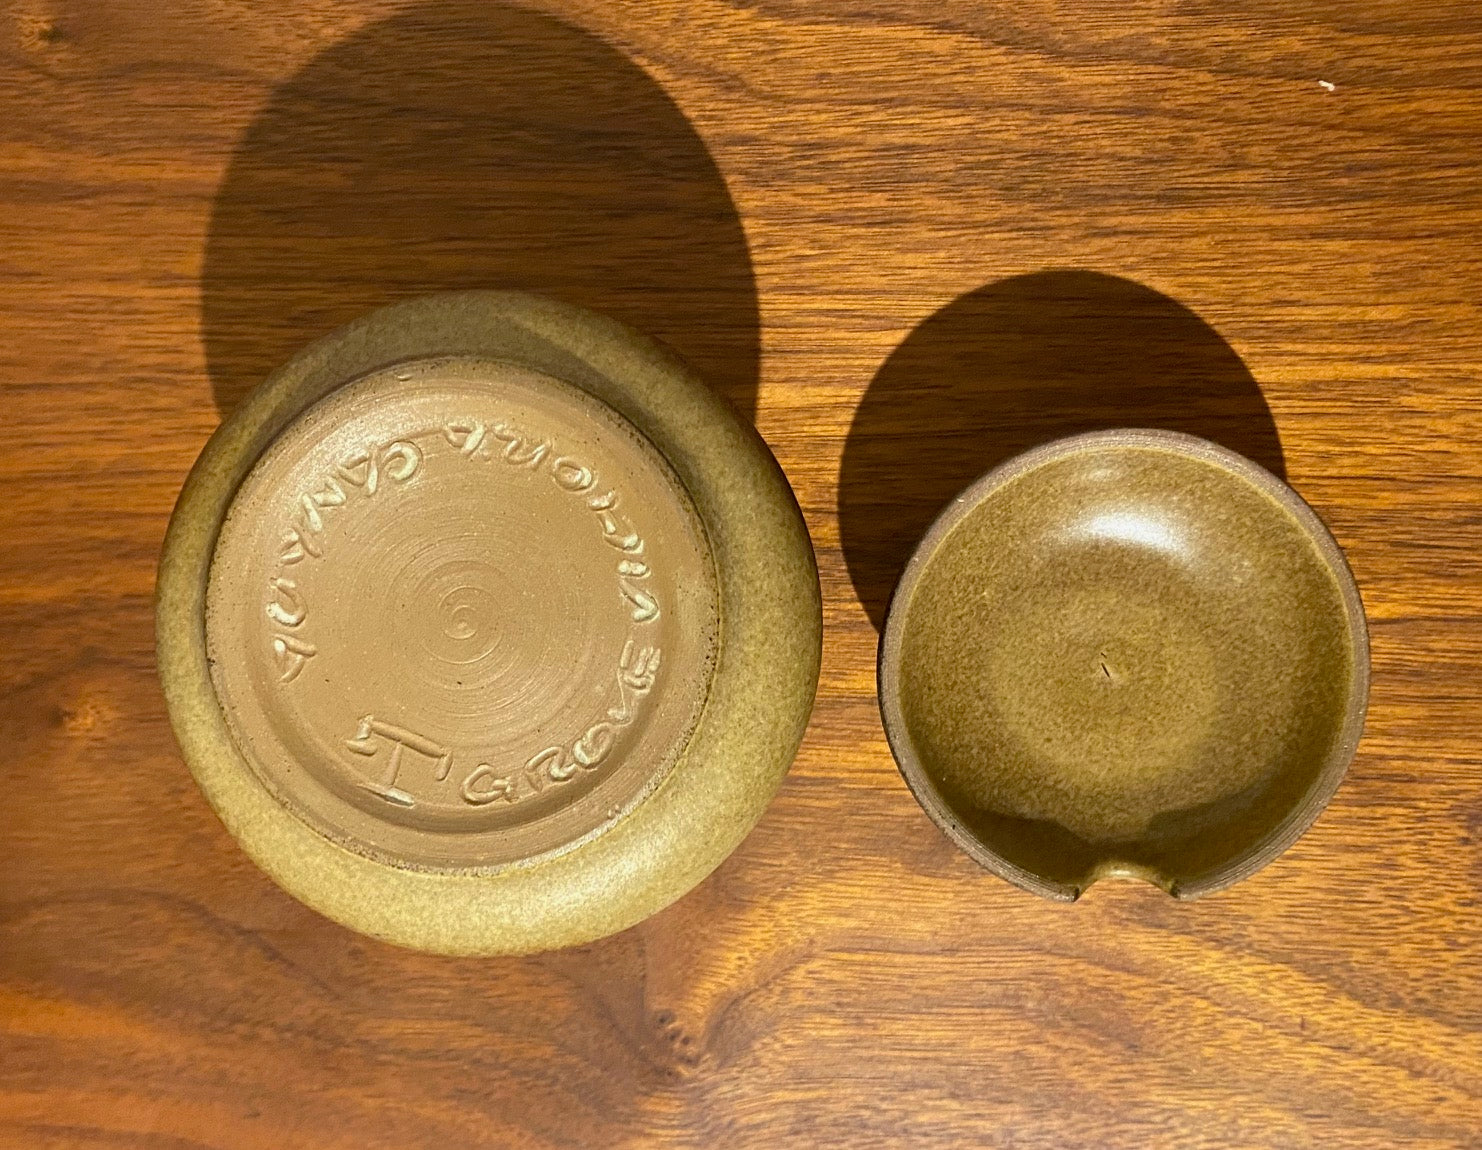 Grove Pottery Ceramic Condiment and Jam Jar In Molten Glaze- Cook Street Vintage